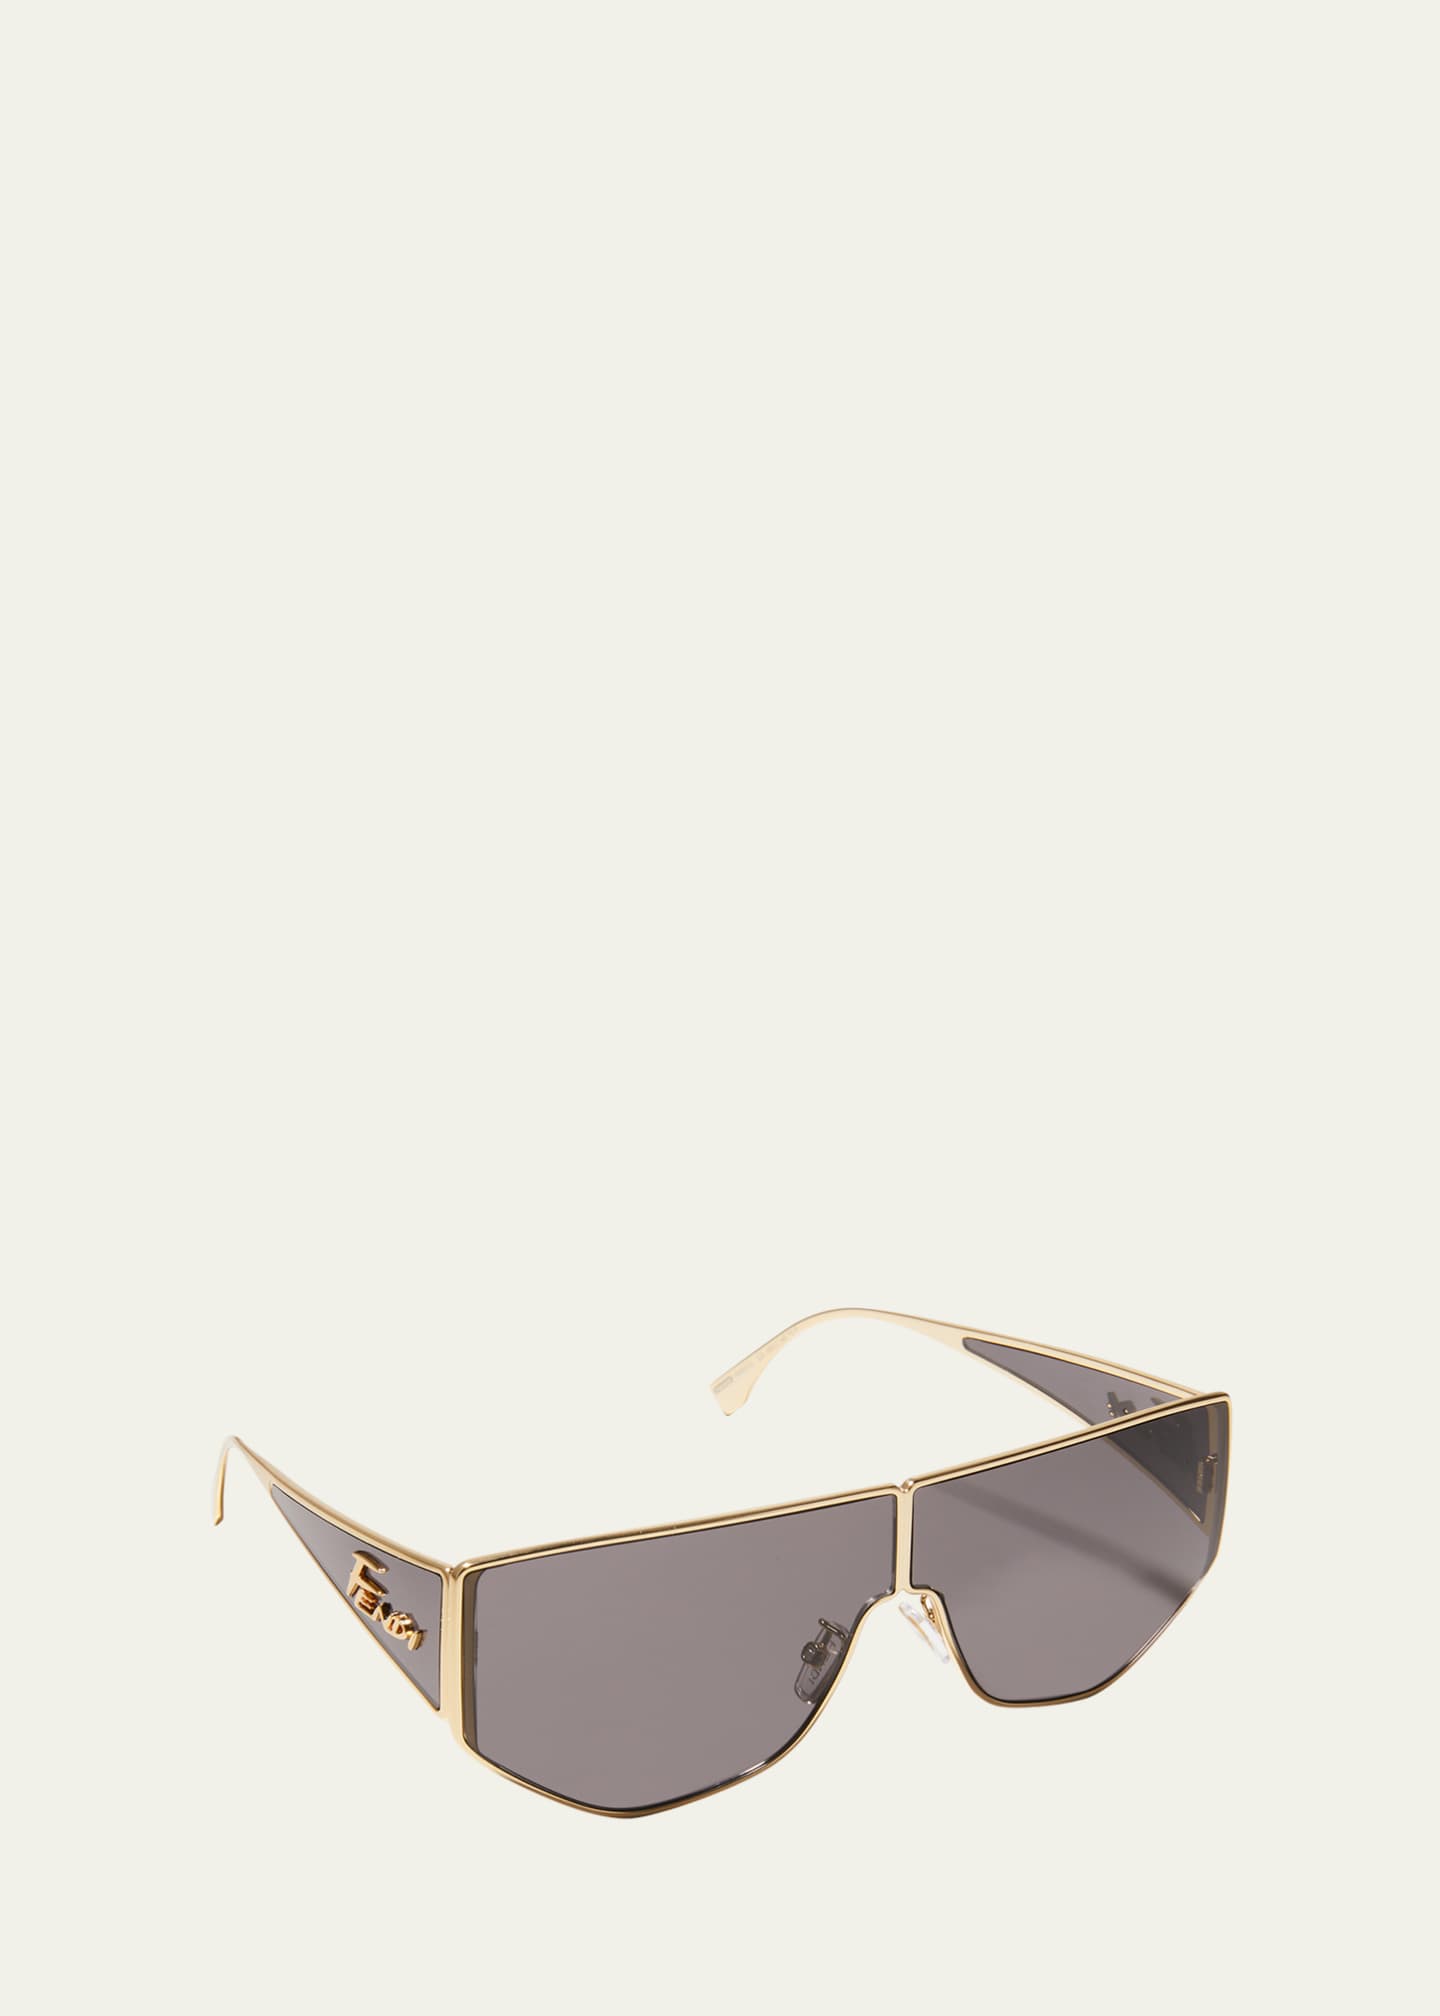 Fendi Sunglasses Men Women's Shield Made In Italy Logo Wrap Authentic Silver